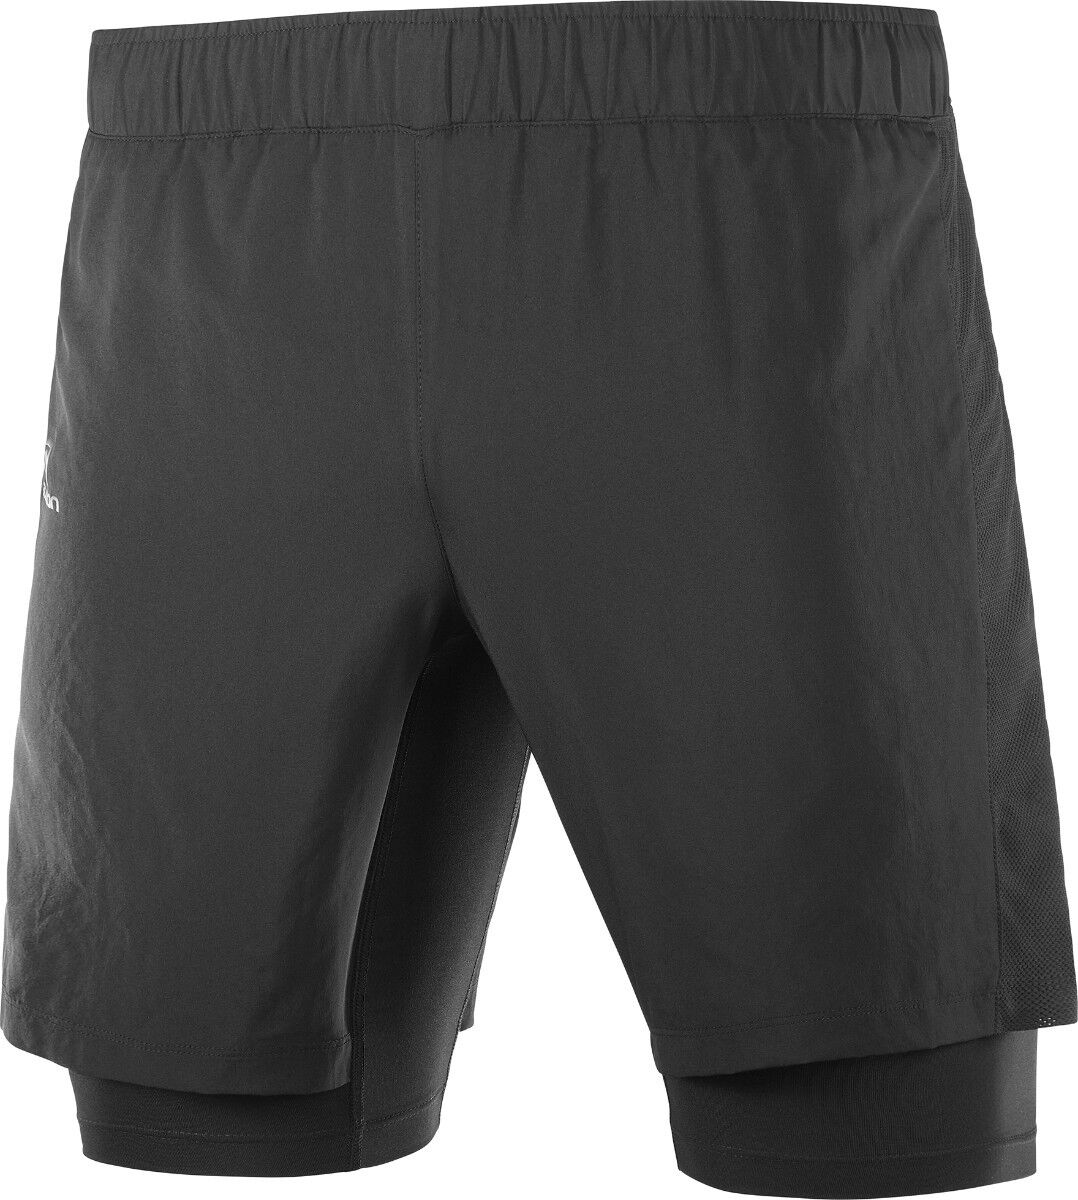 Salomon Xa Twinskin Short - Trail running shorts - Men's